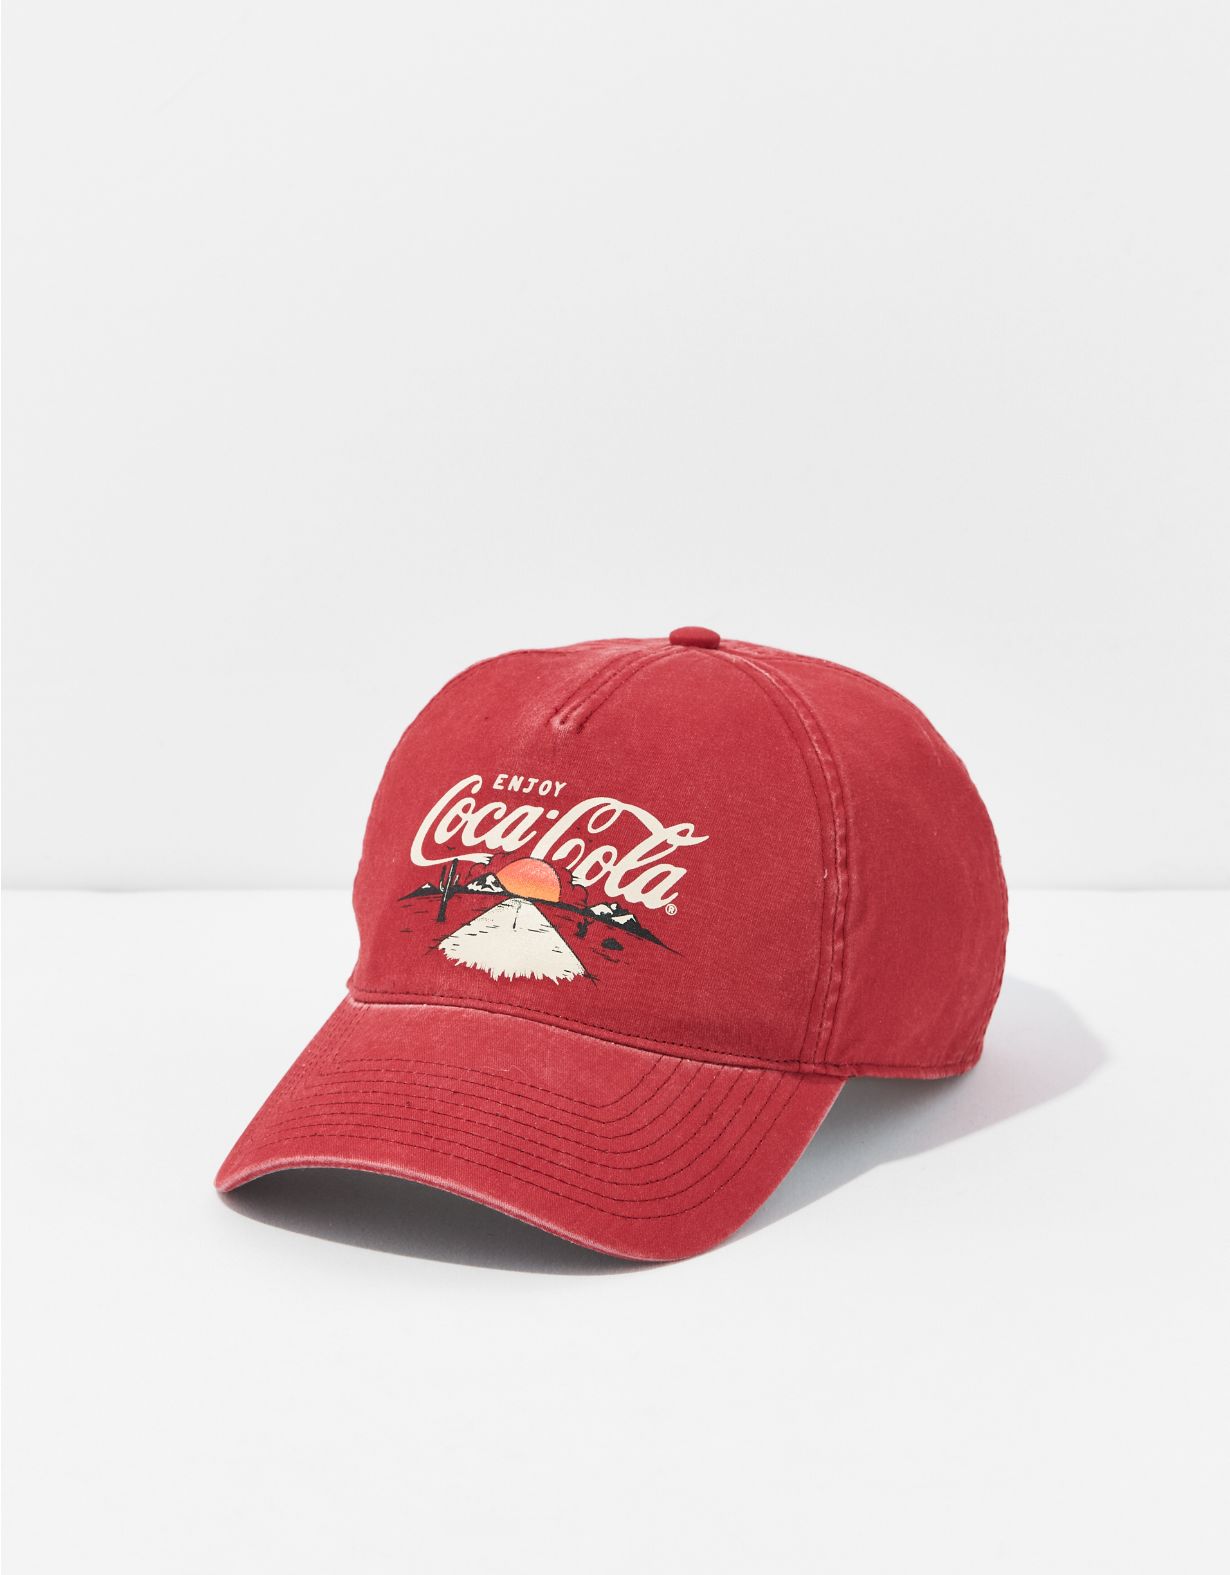 American Needle Coca Cola Baseball Hat